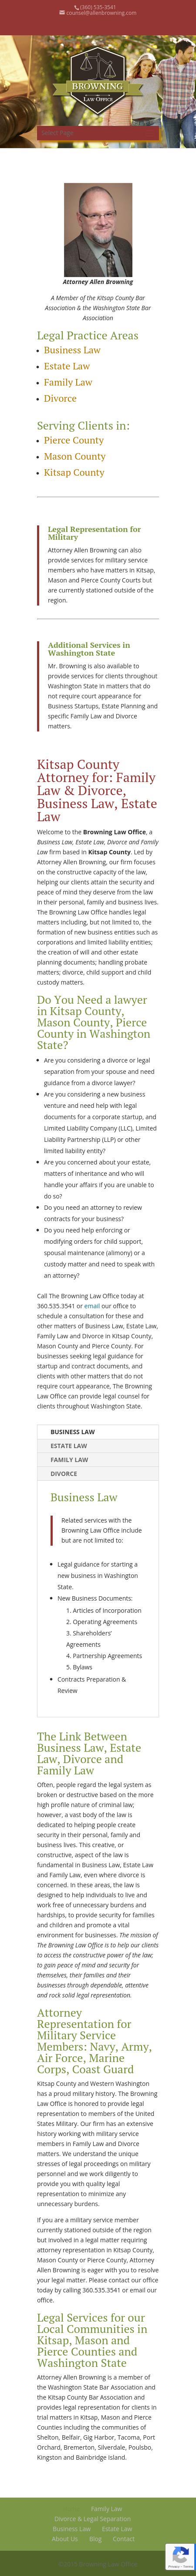 Browning Law Office - Silverdale WA Lawyers